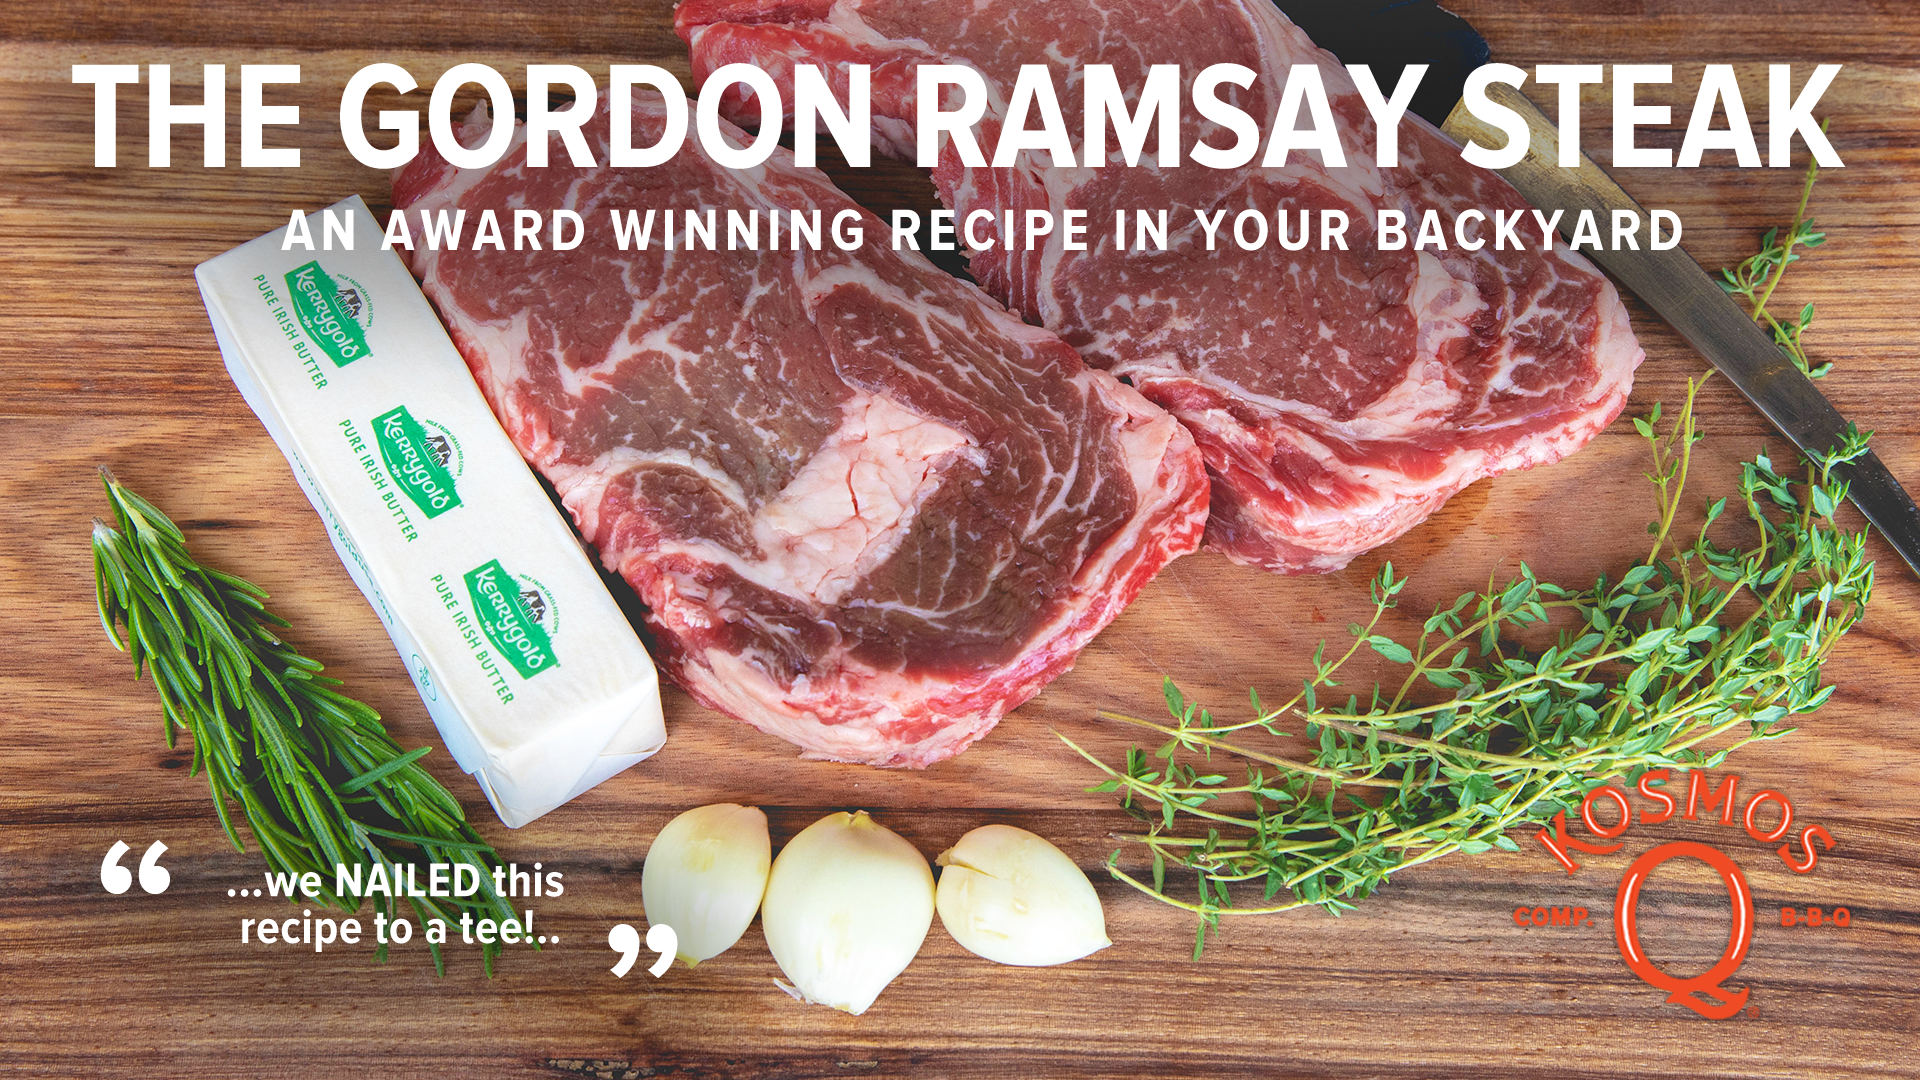 The Gordon Ramsay Steak